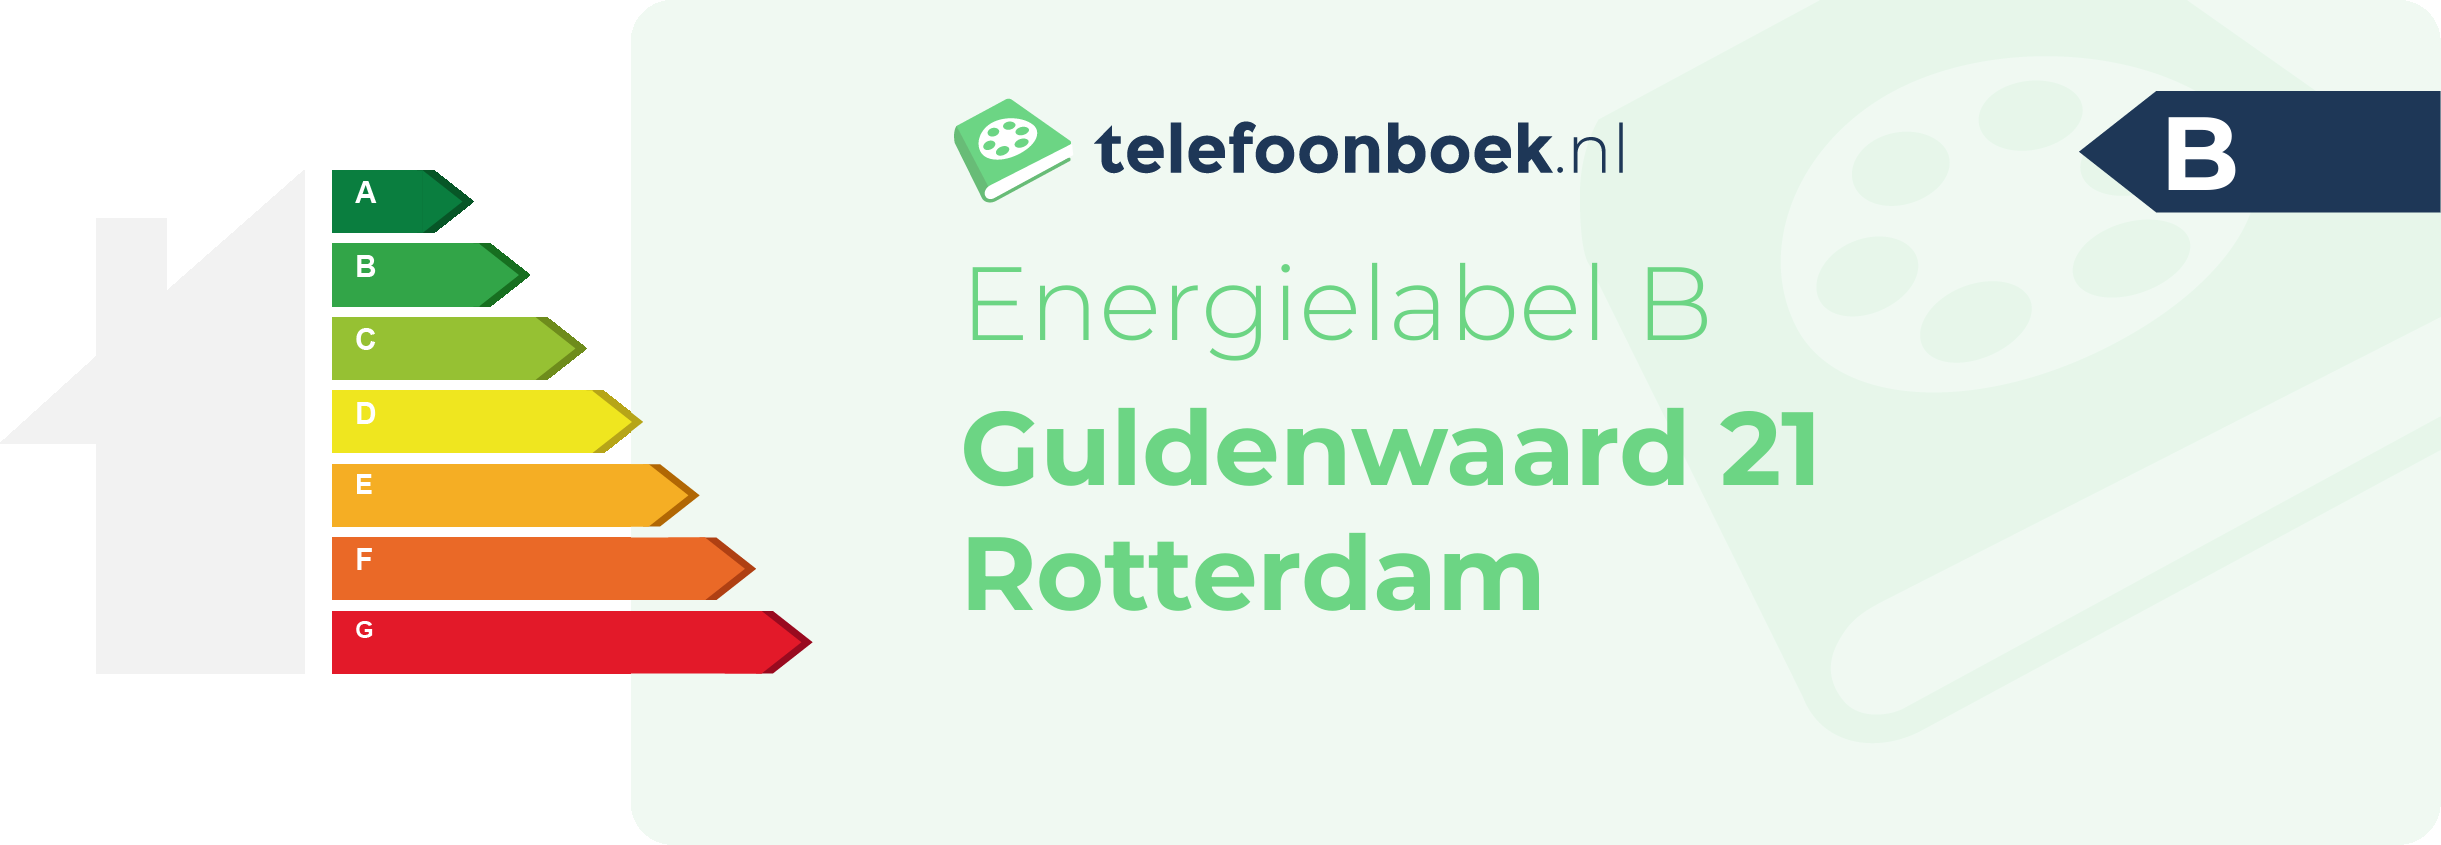 Energielabel Guldenwaard 21 Rotterdam